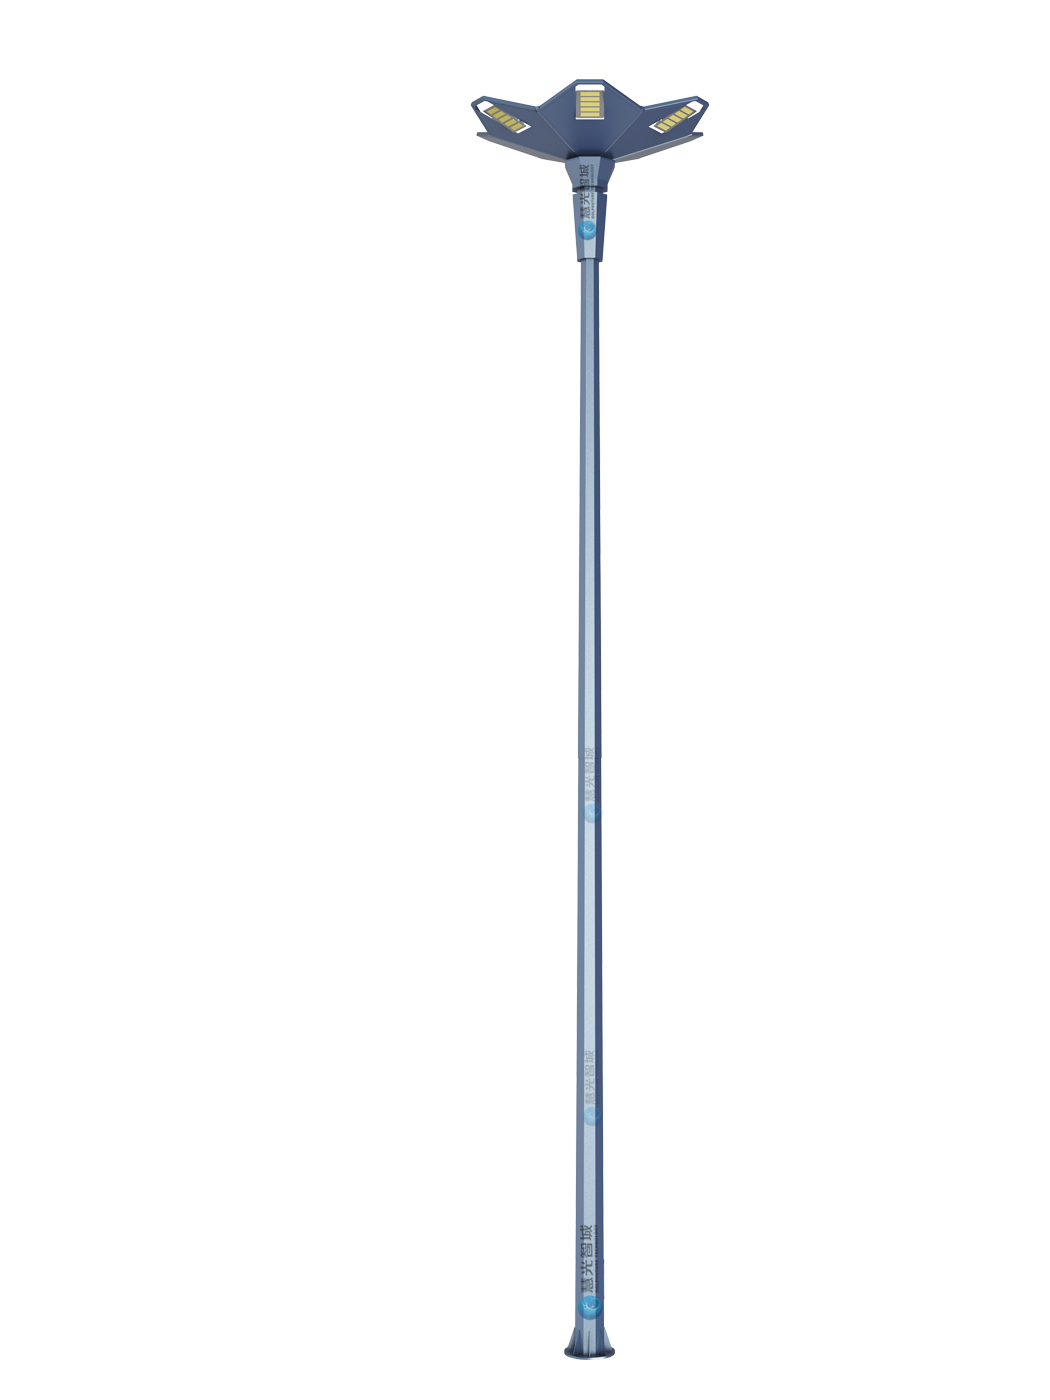 Smart pole lamp